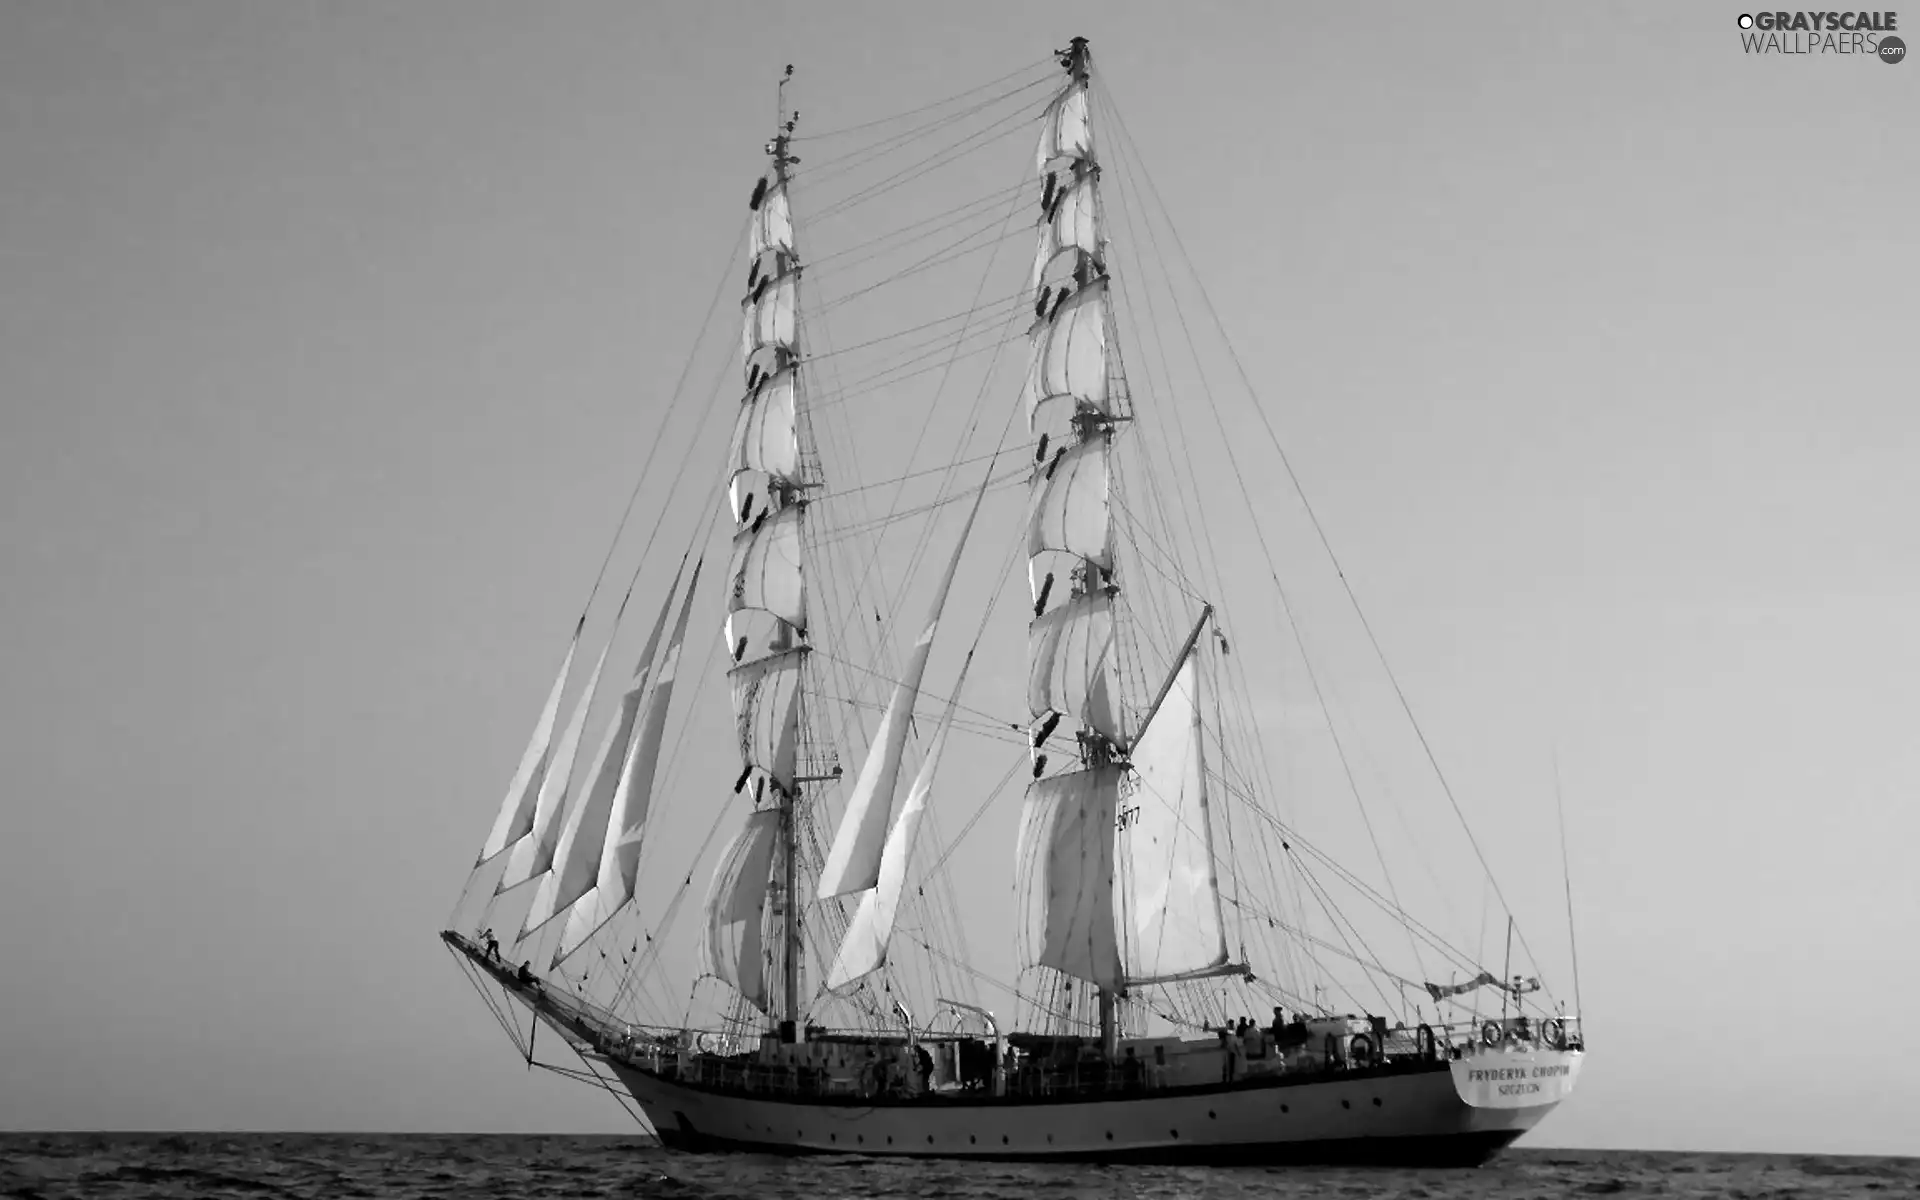 Sailing ship Fryderyk Chopin